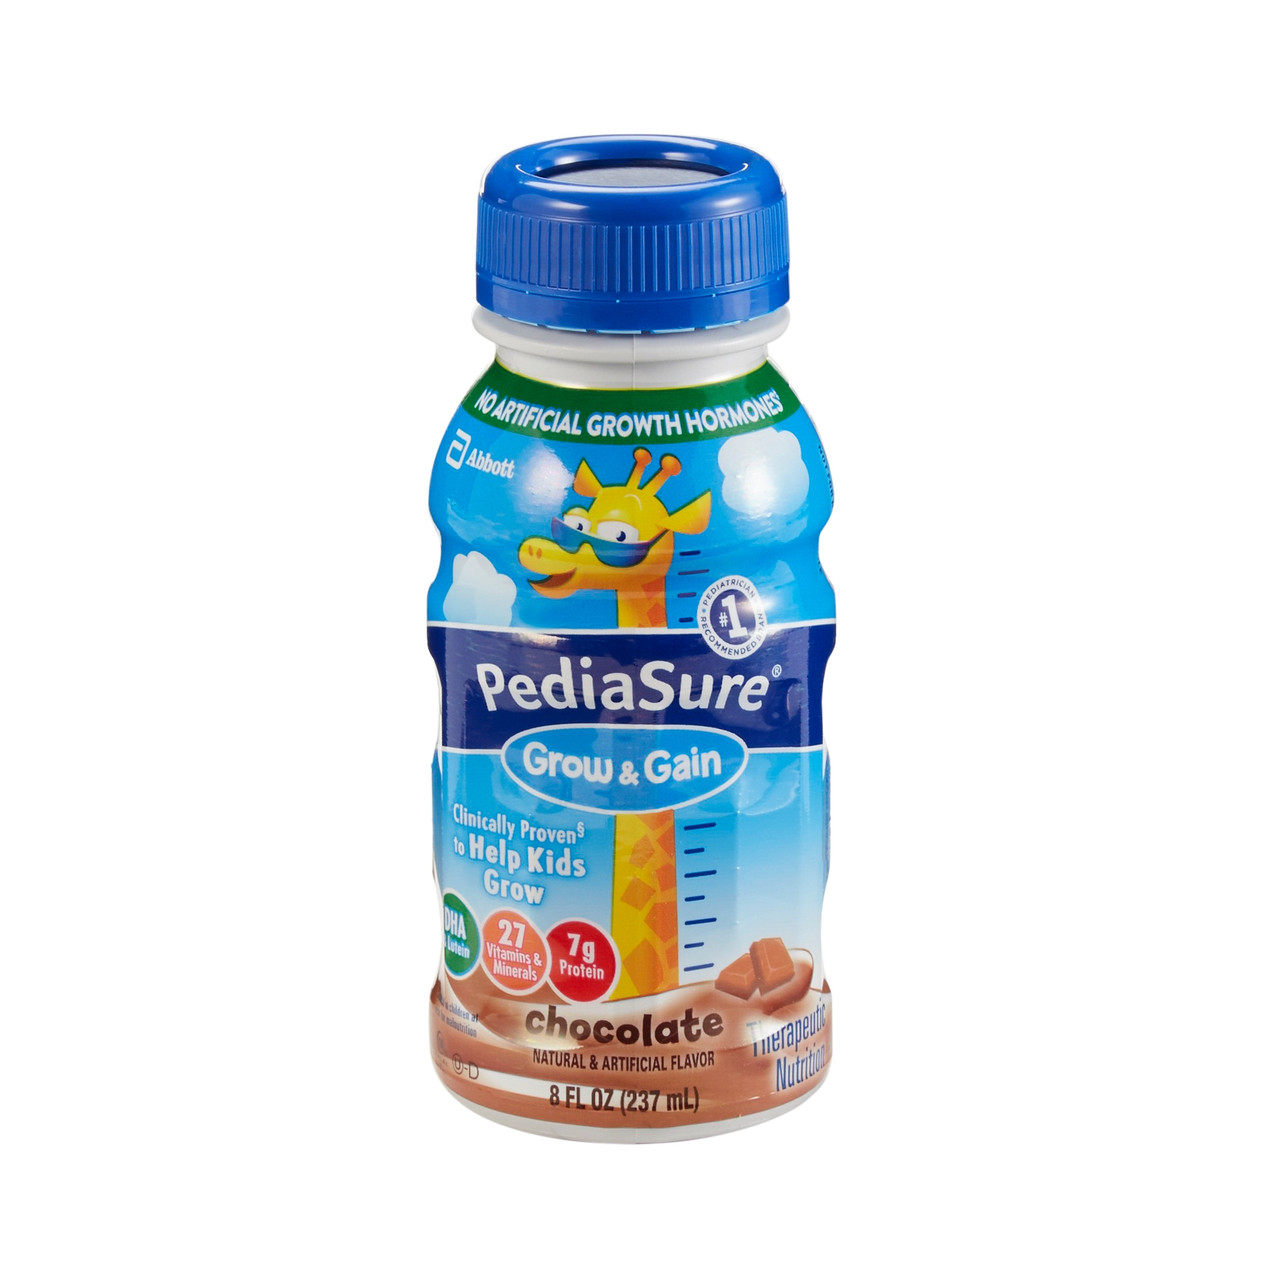 PediaSure Grow & Gain Kids Nutritional 8 FL OZ, 6 CT